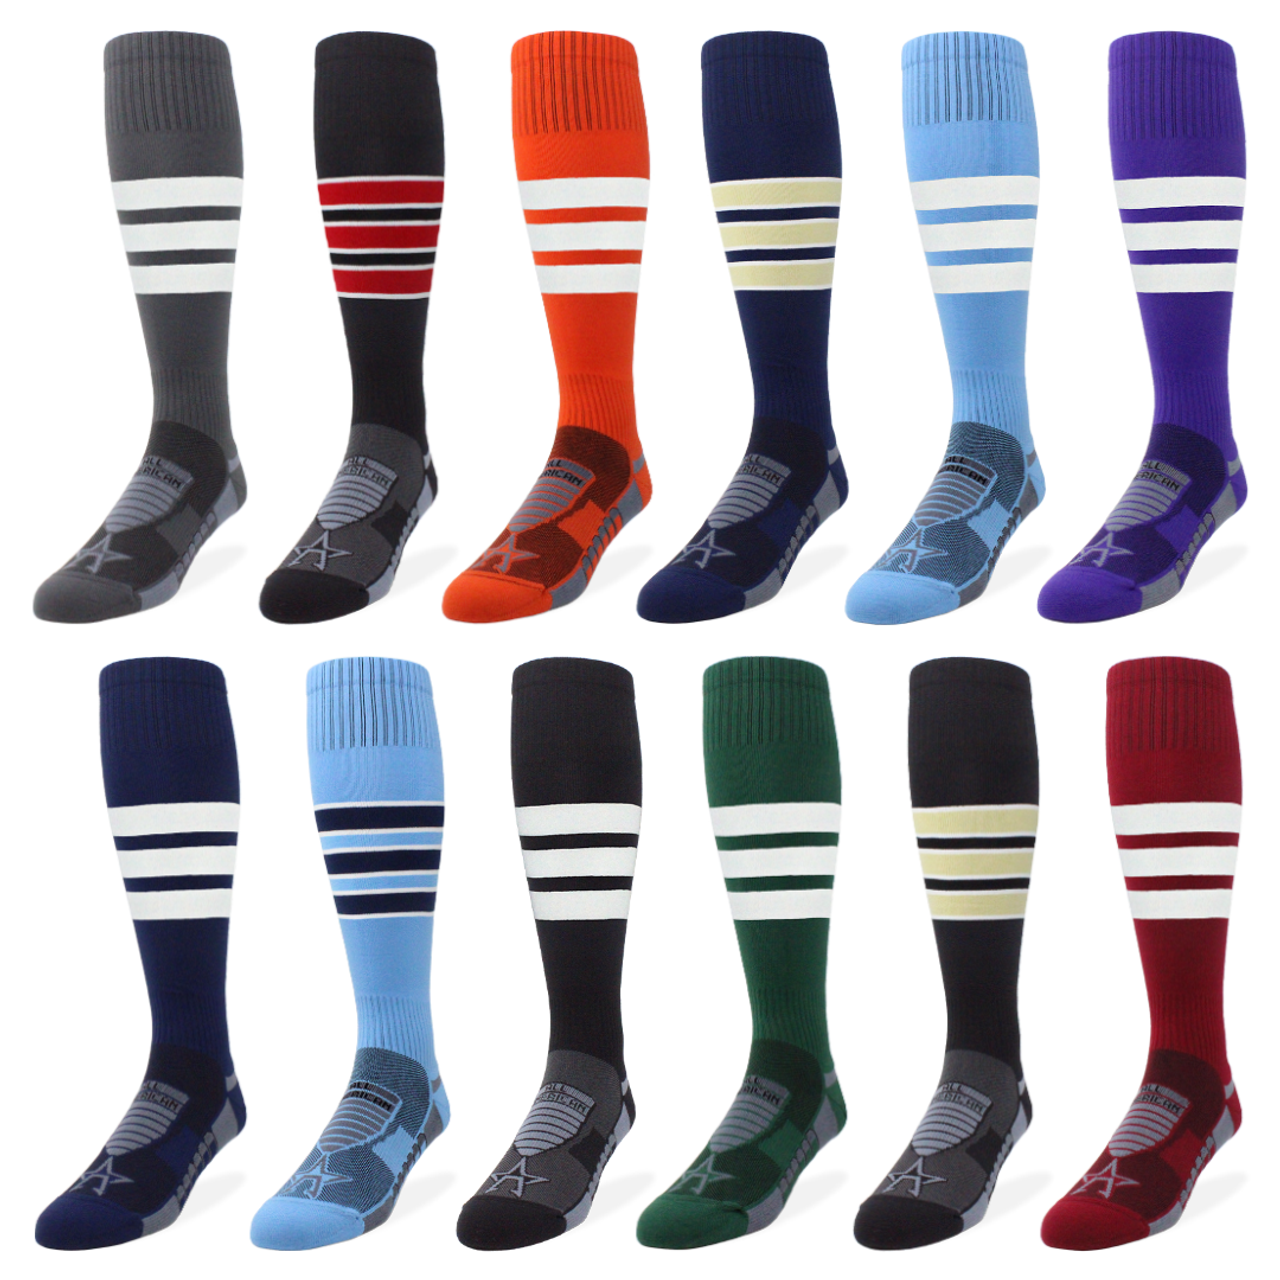 All American Striped Socks | White